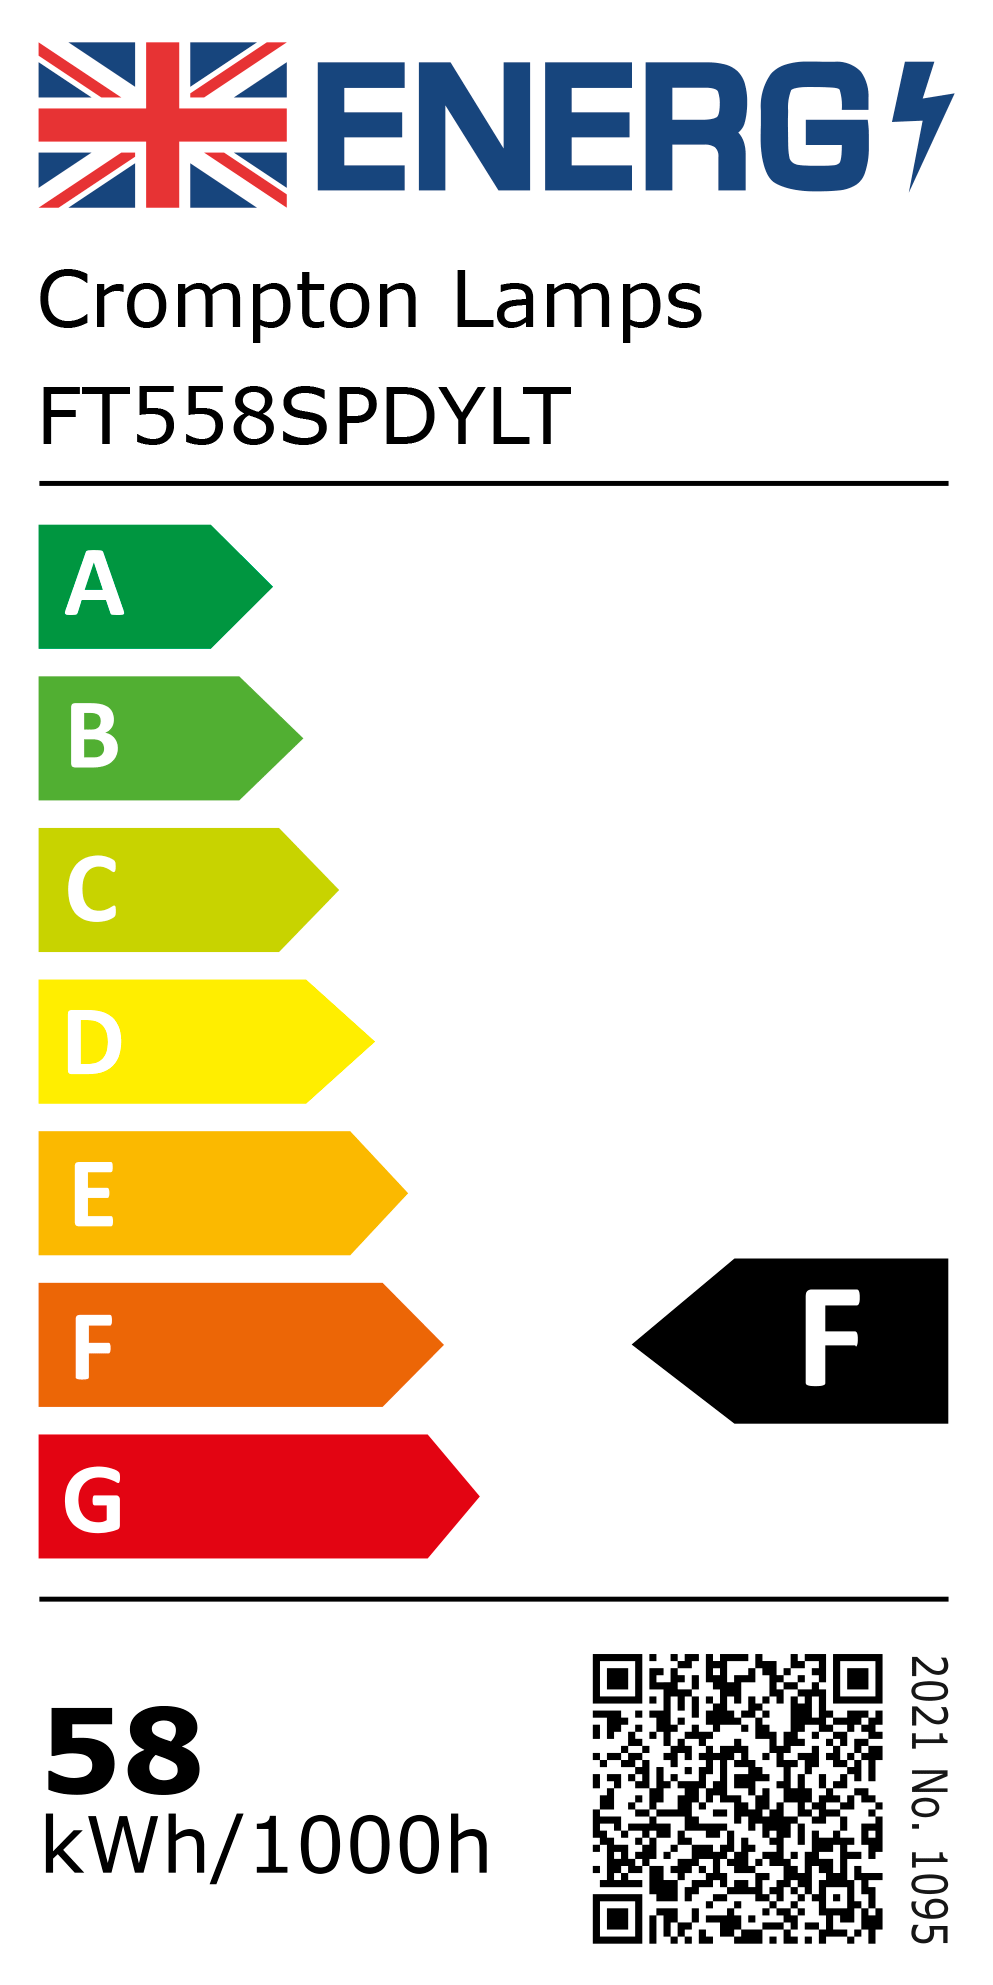 New 2021 Energy Rating Label: Stock Code FT558SPDYLT